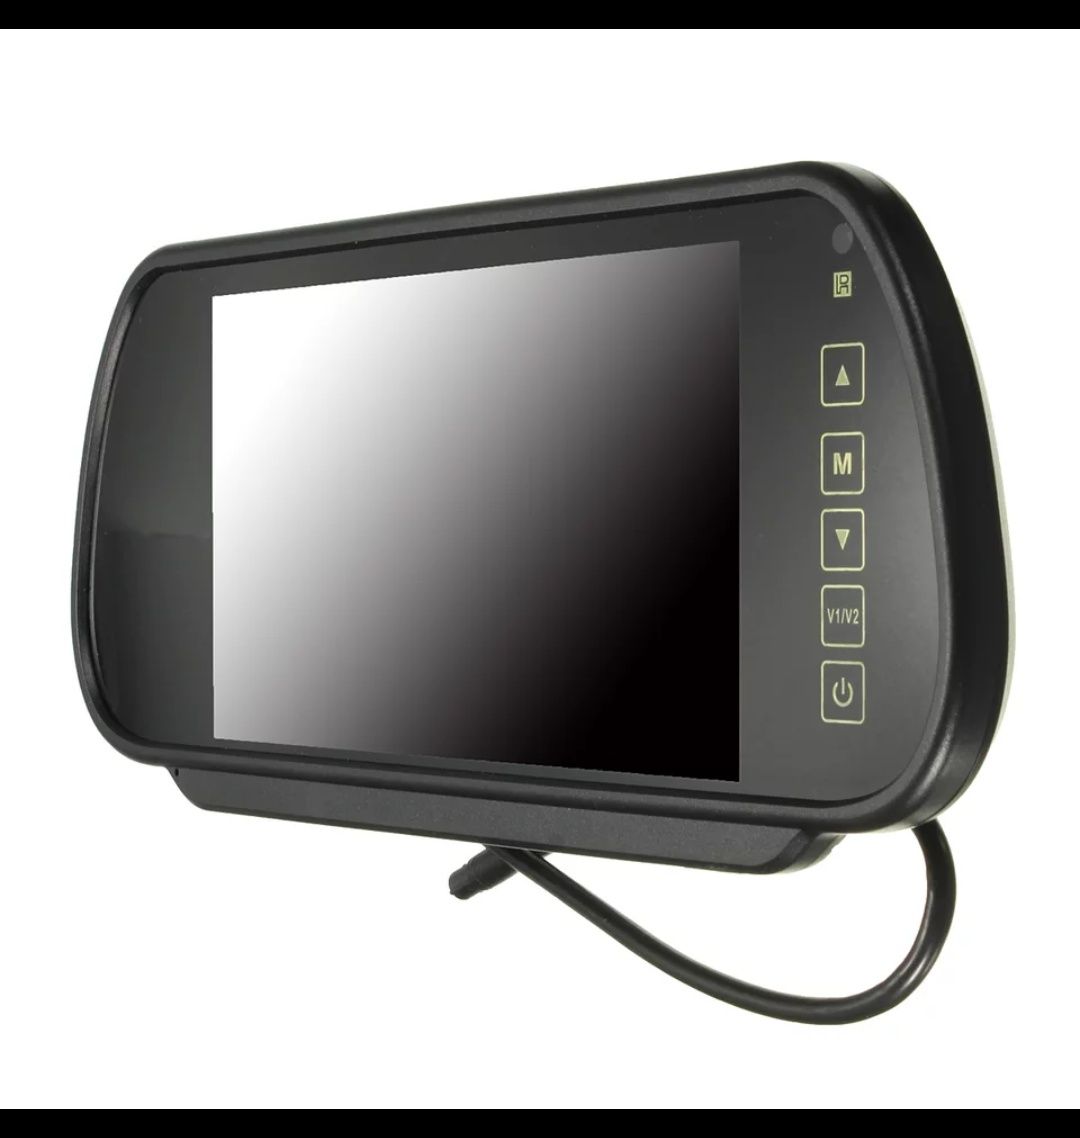 Monitor TFT LCD de 7" para espelho retrovisor